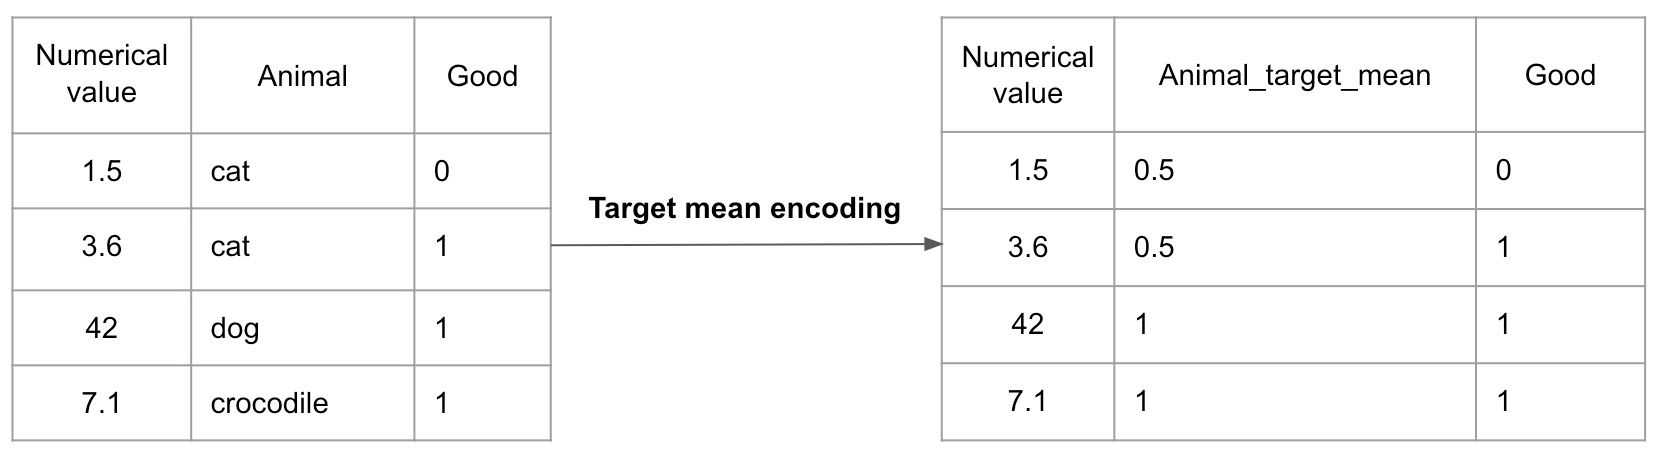 Target mean encoding